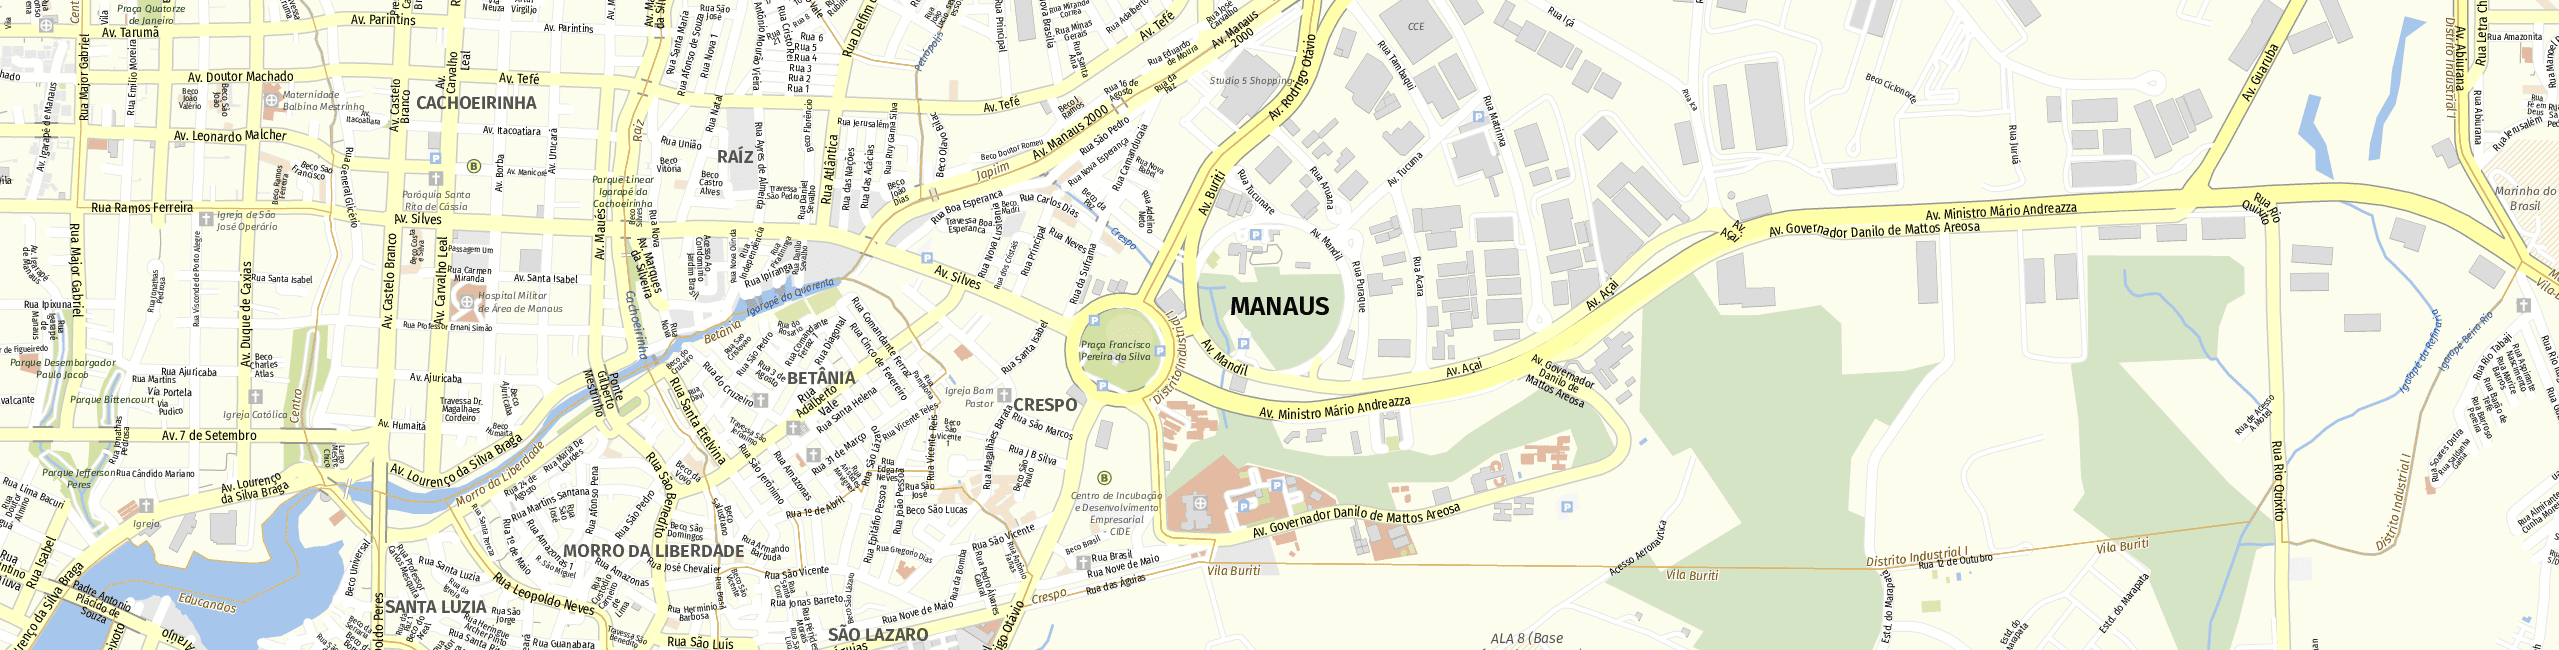 Stadtplan Manaus zum Downloaden.